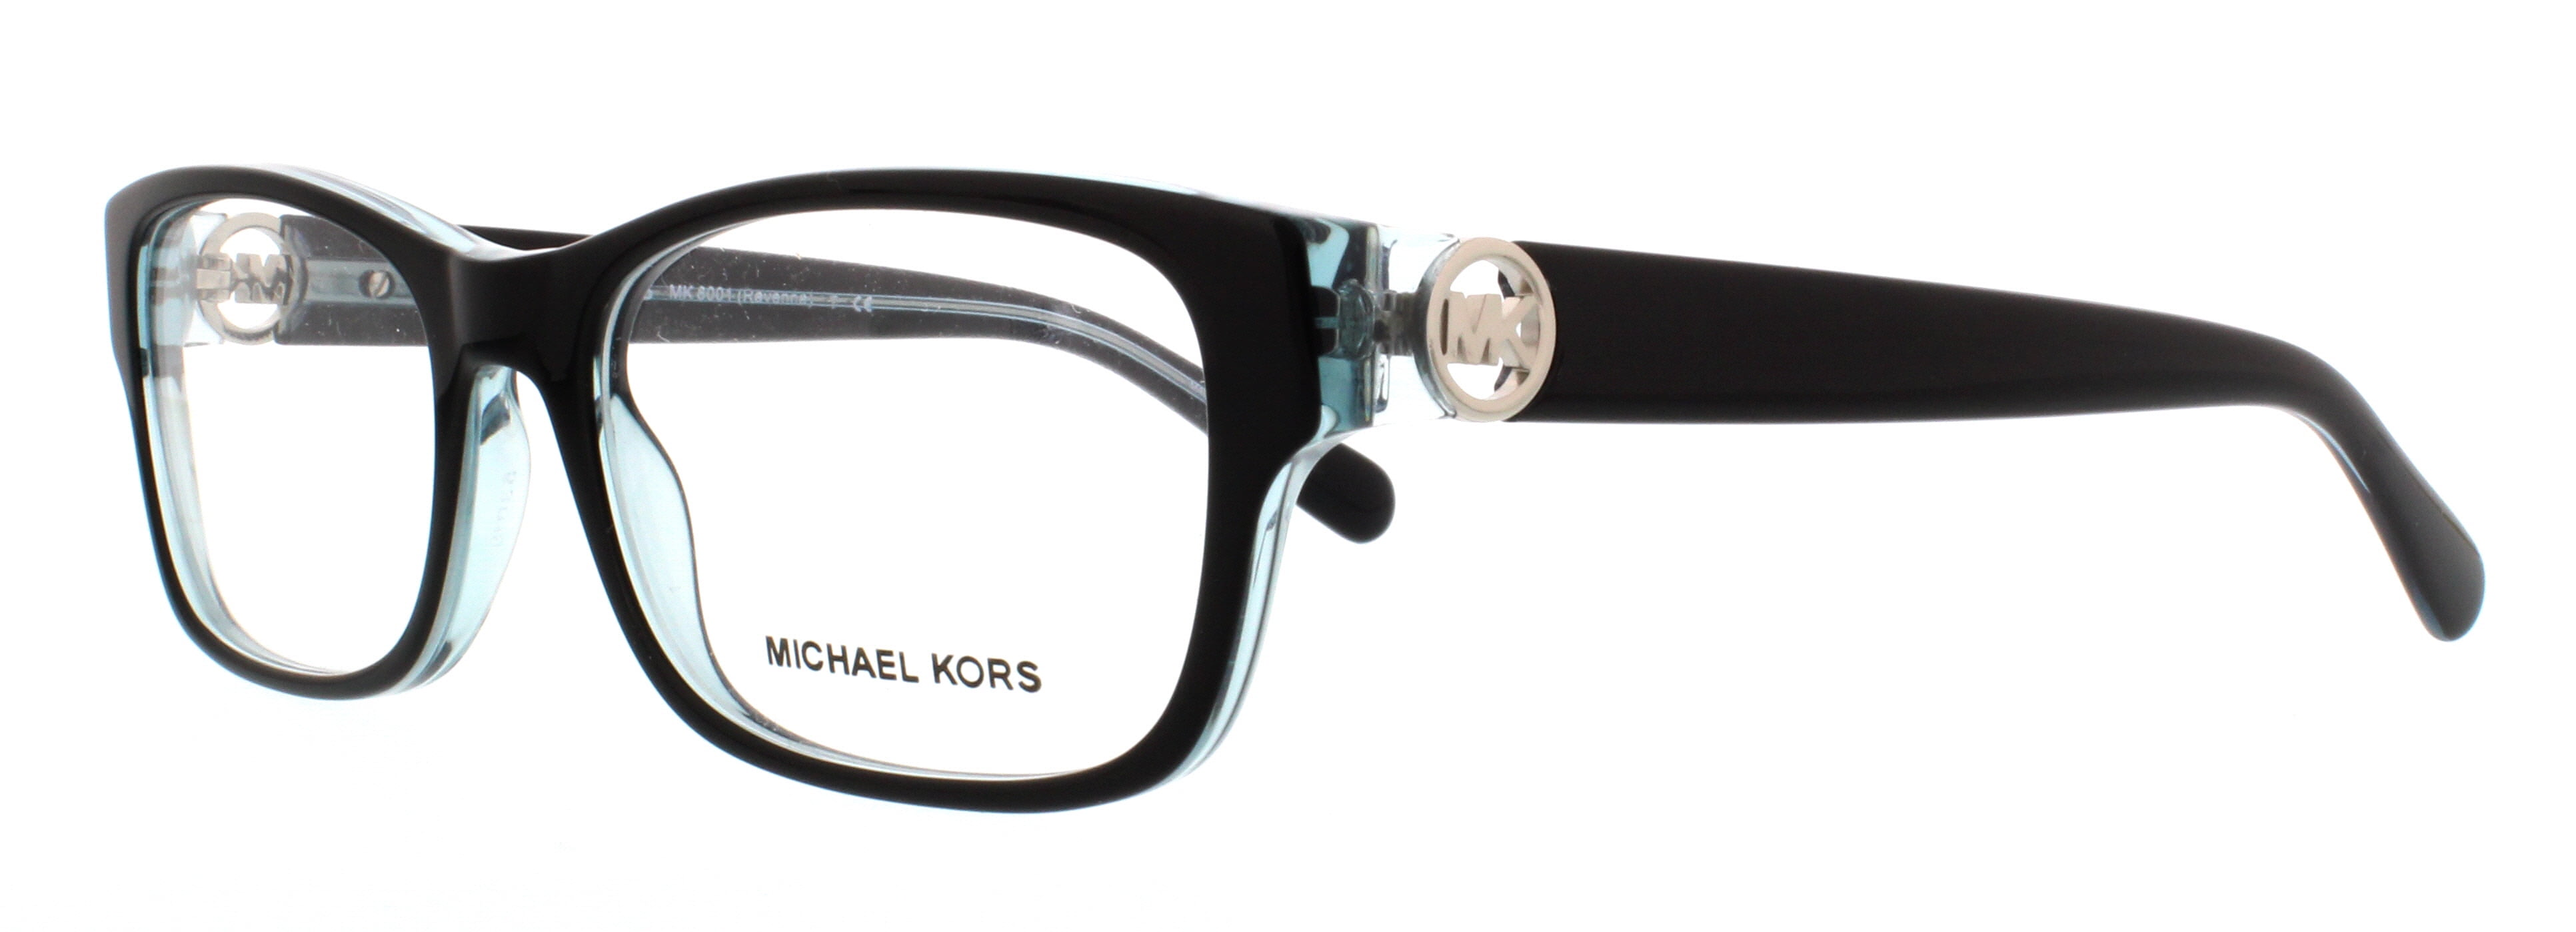 MICHAEL KORS Eyeglasses MK 8001 3001 